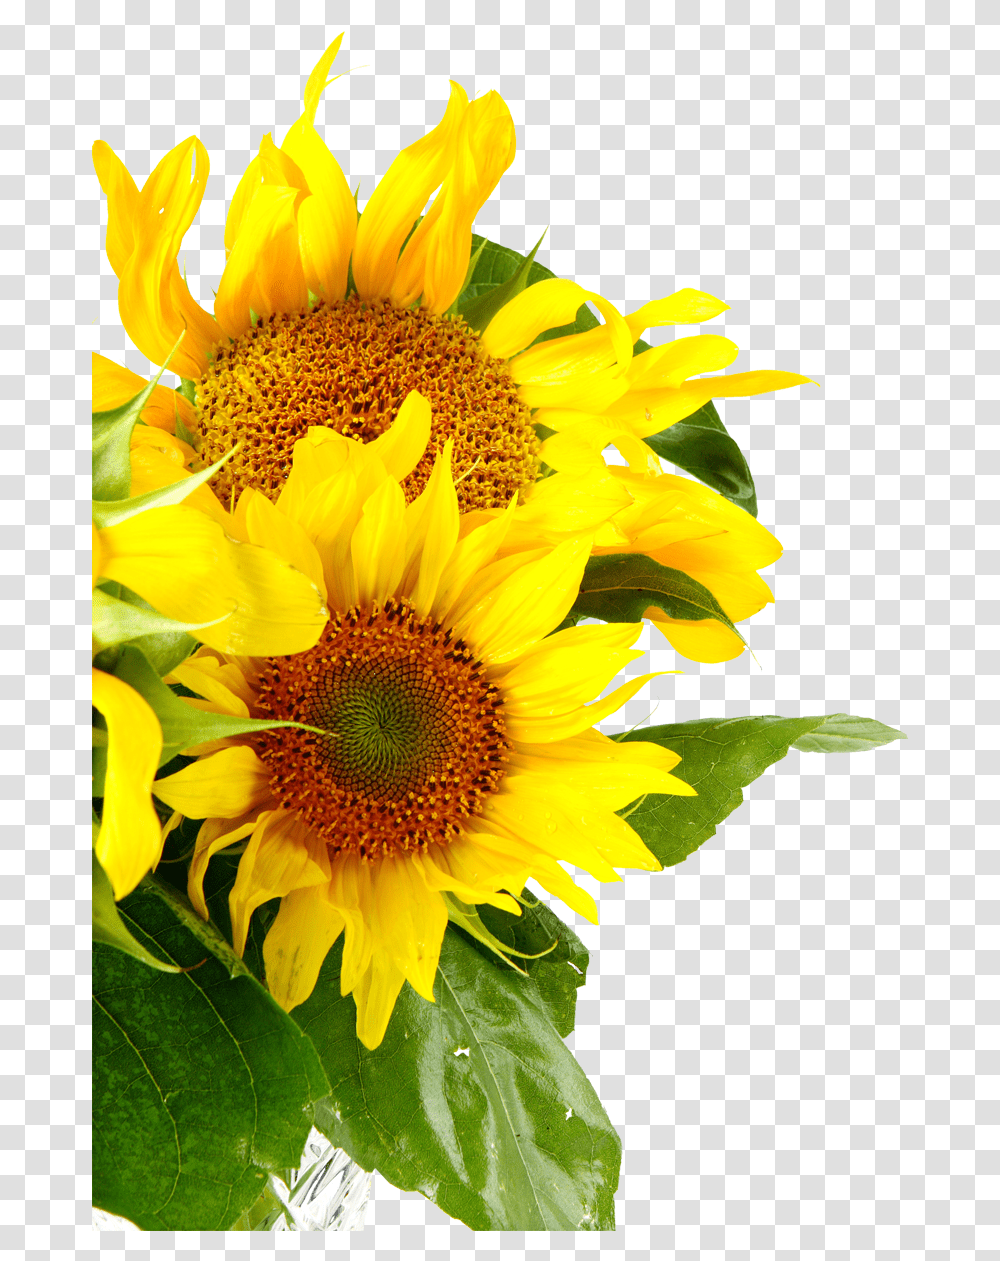 Sunflowers Common Sunflower Royalty Free Sunflower Free Pics Of Sunflowers, Plant, Blossom, Flower Arrangement, Daisy Transparent Png